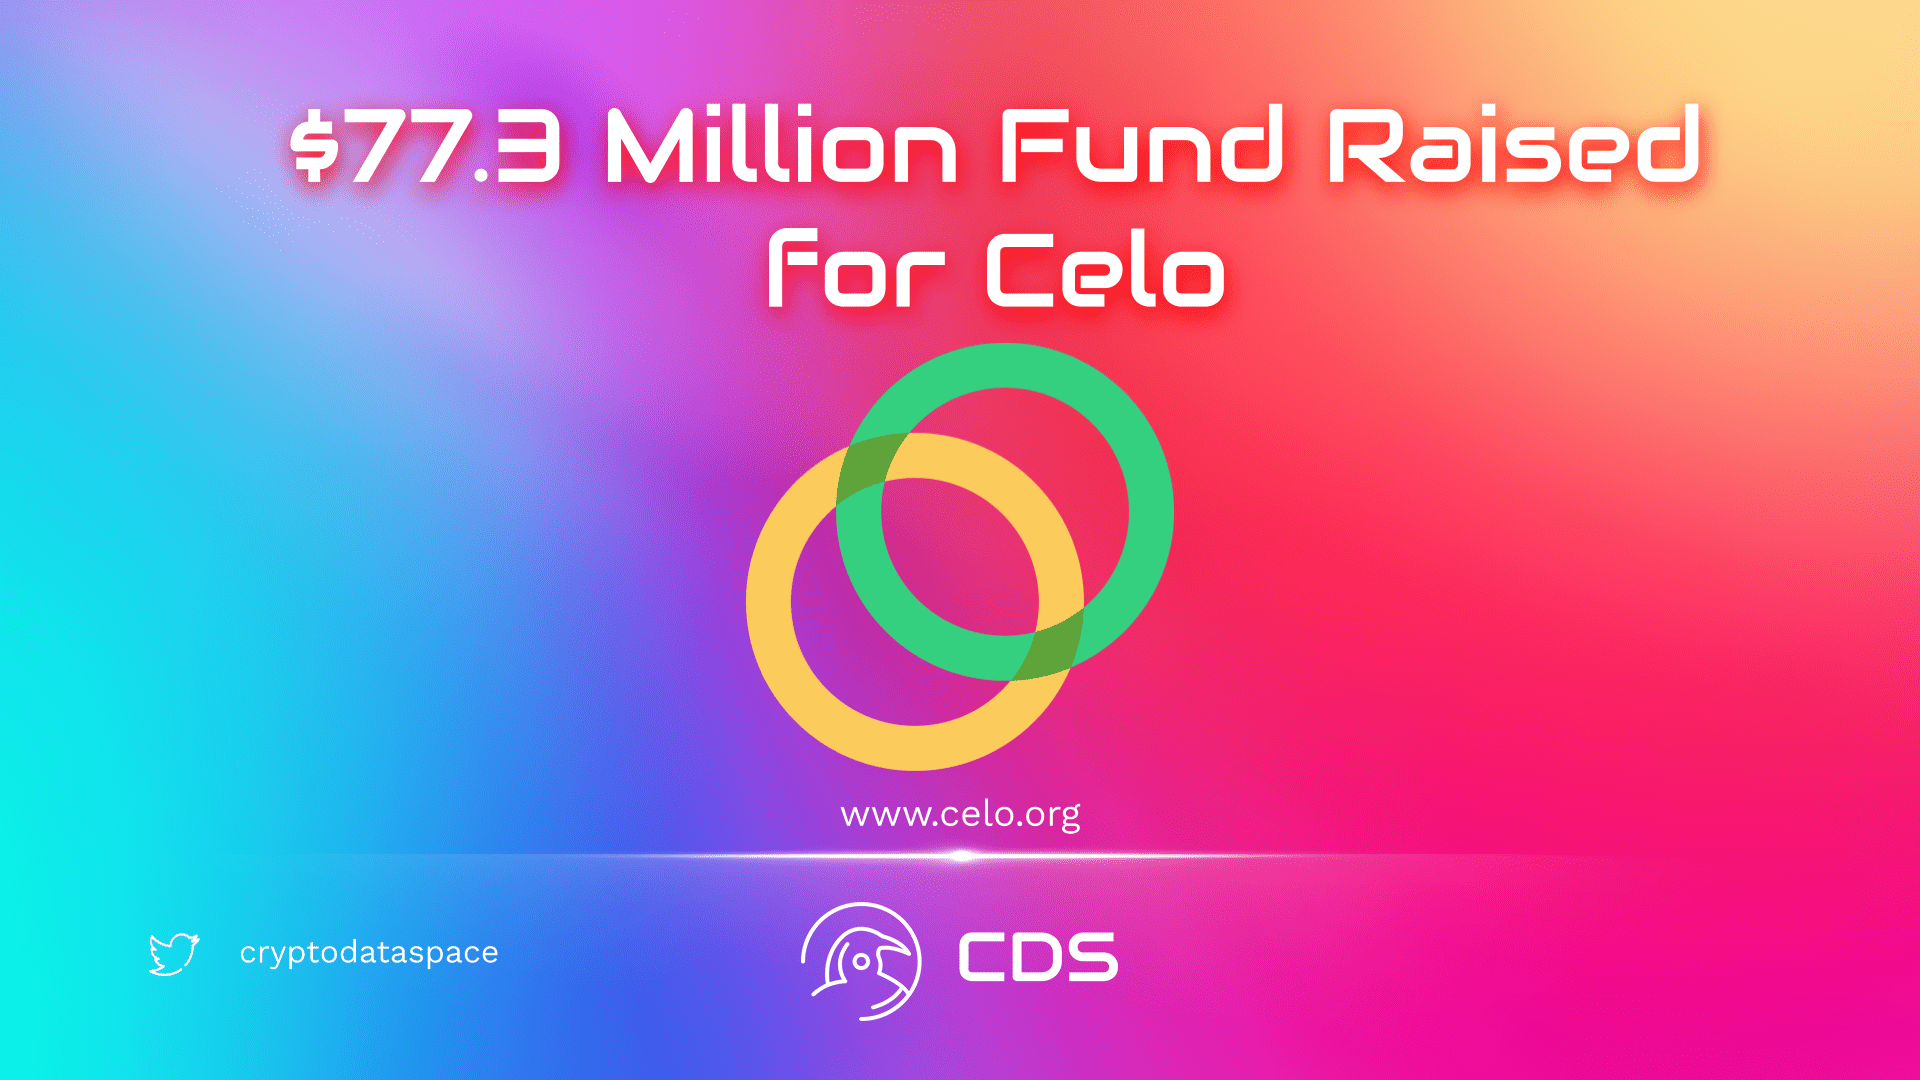 $77.3 Million Fund Raised for Celo